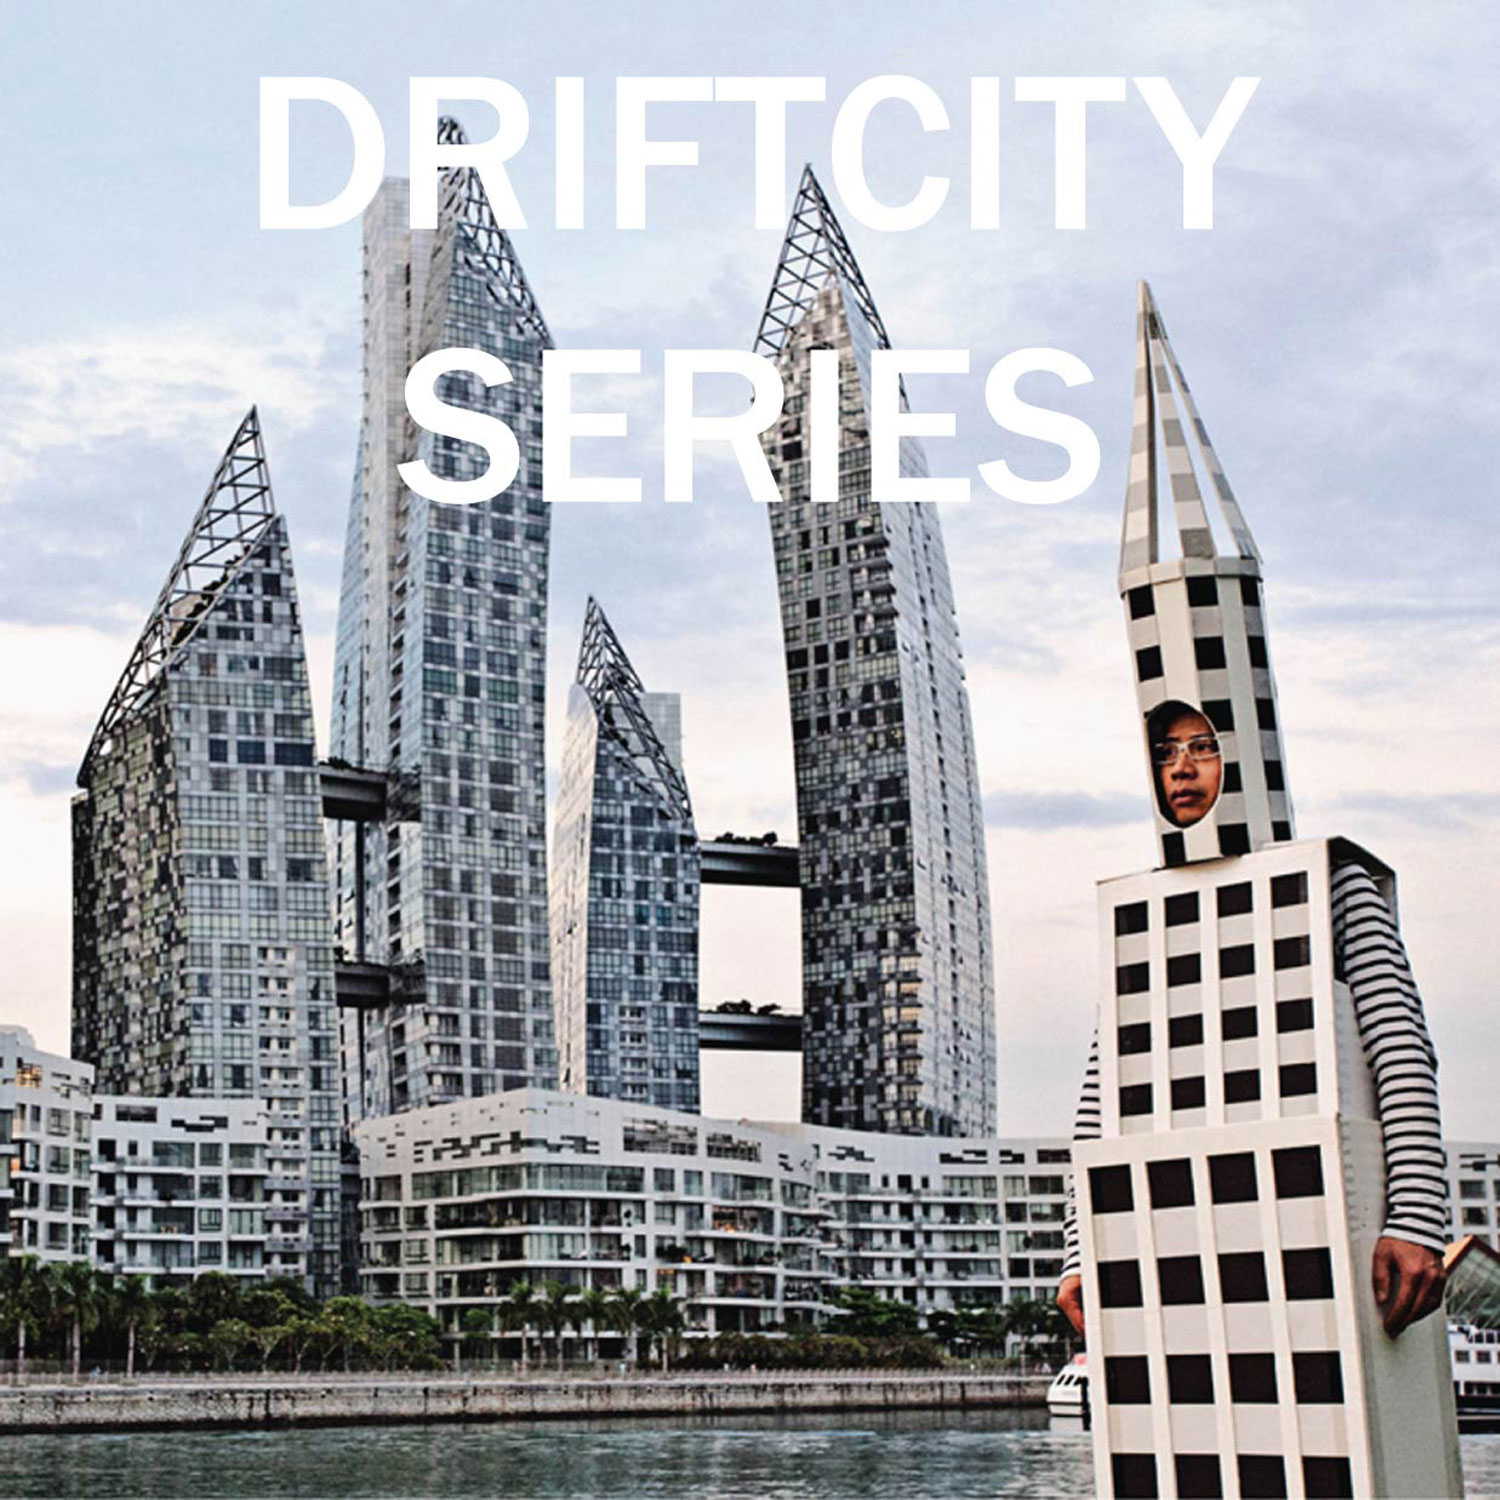    Drift City Photo Series 游離都市系列相片集   